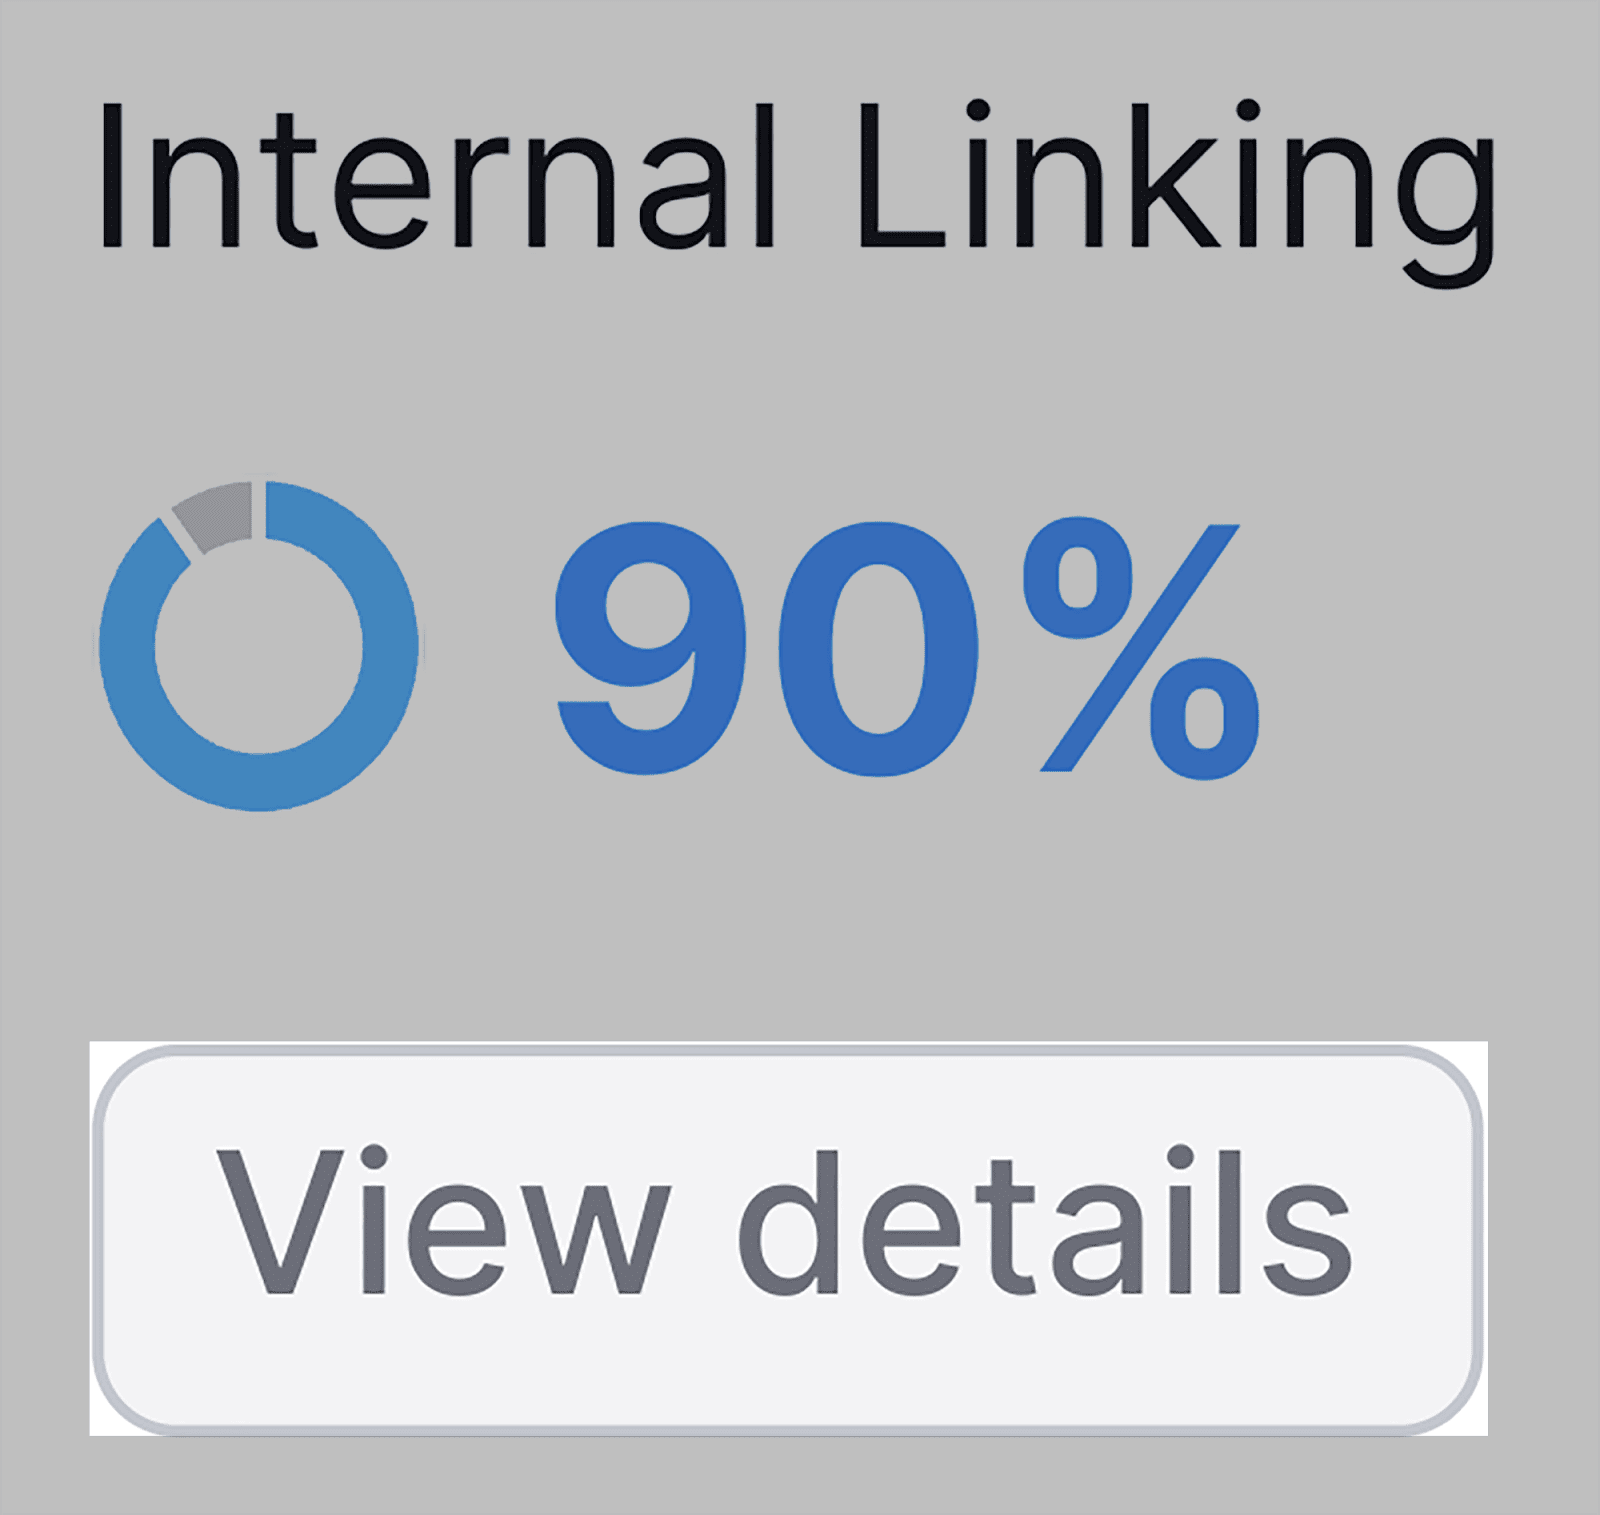 View details on the internal linking widget